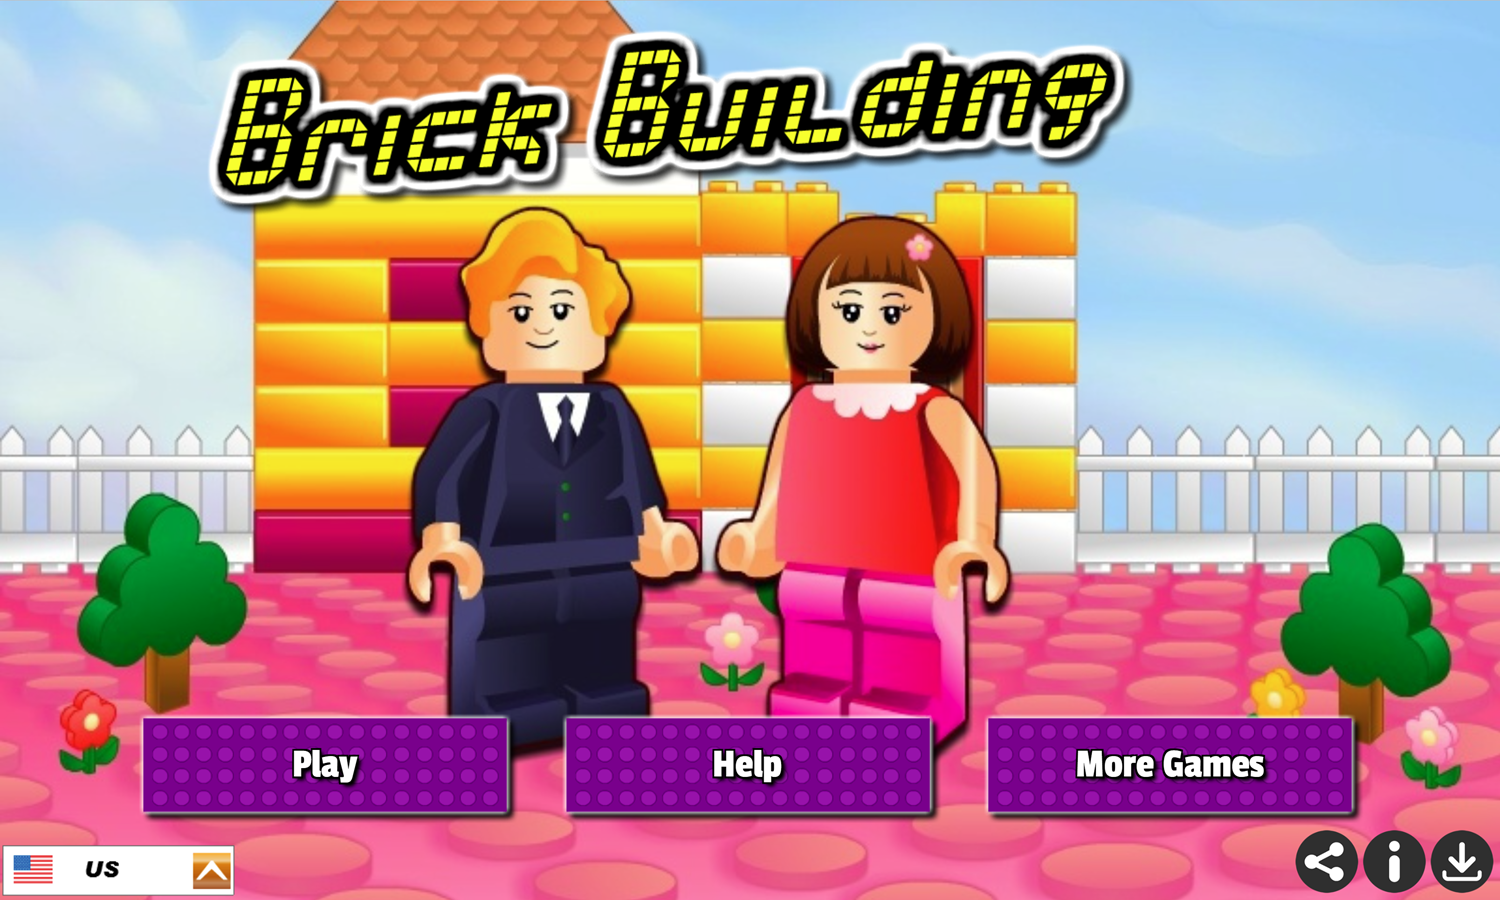 Brick Building Game Welcome Screen Screenshot.